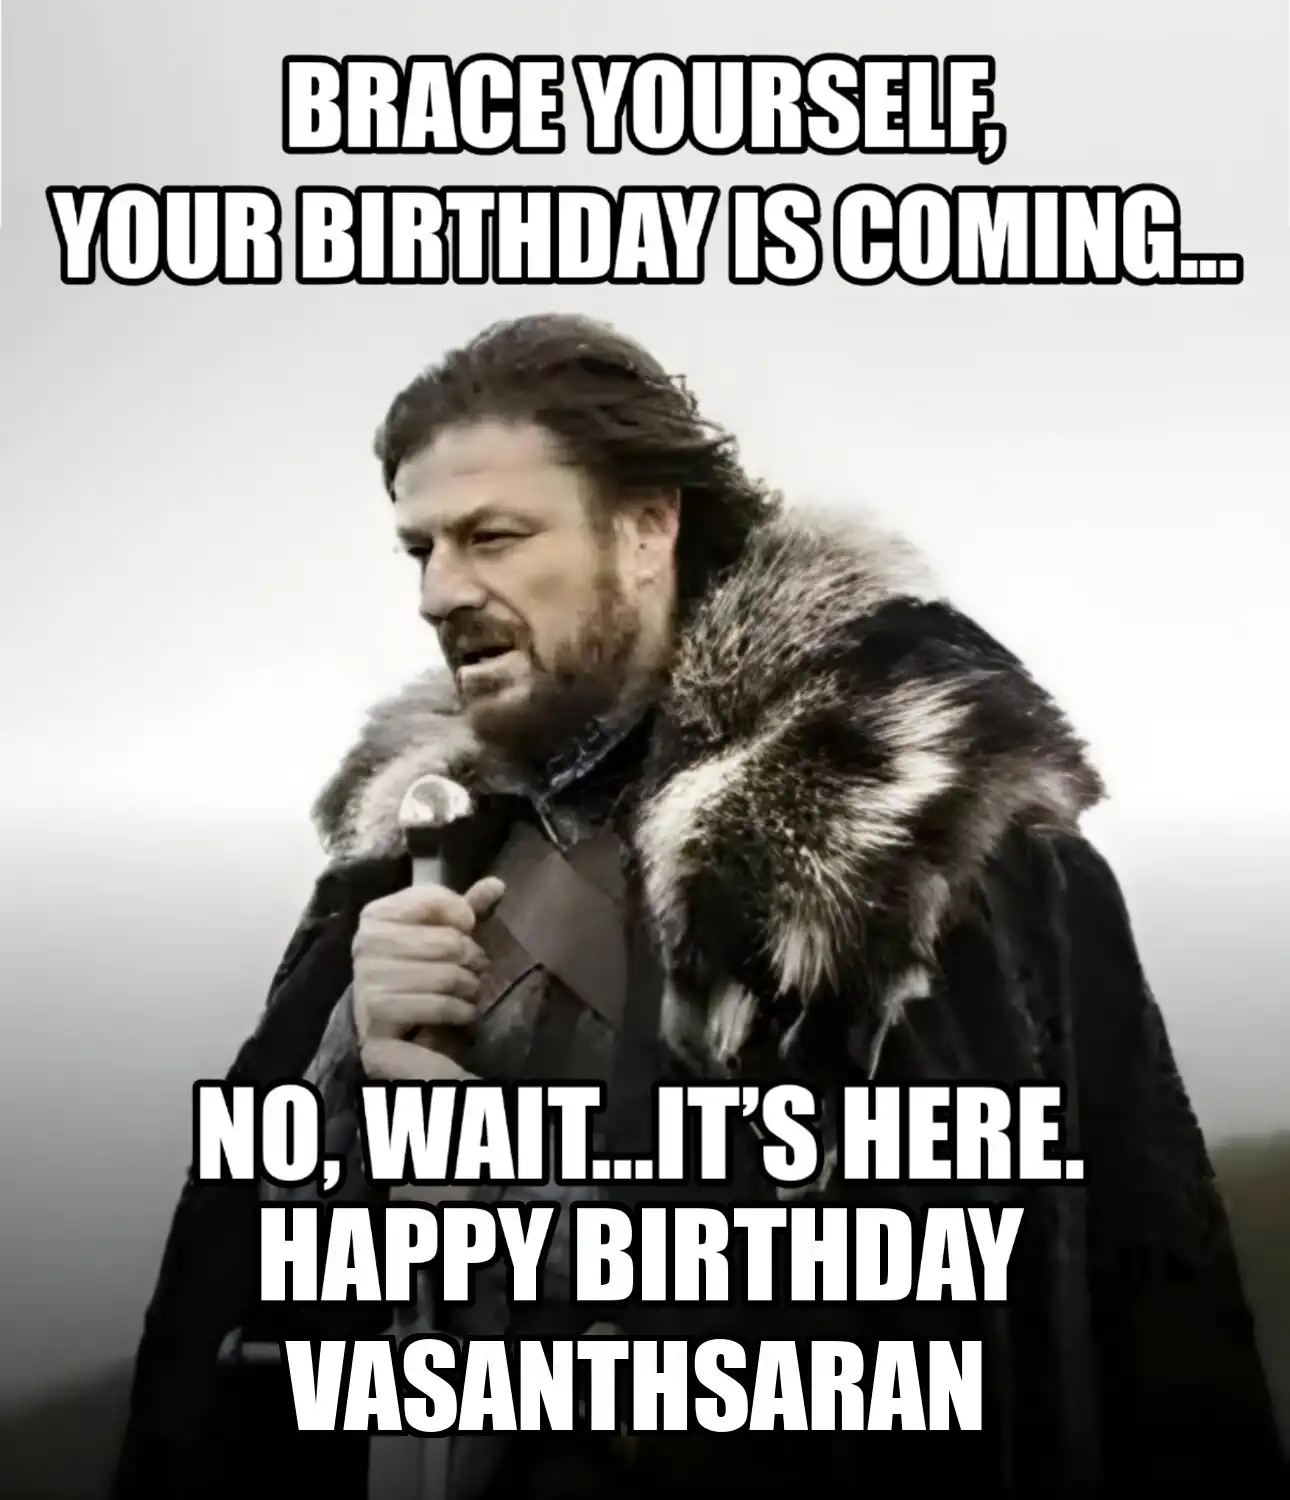 Happy Birthday Vasanthsaran Brace Yourself Your Birthday Is Coming Meme